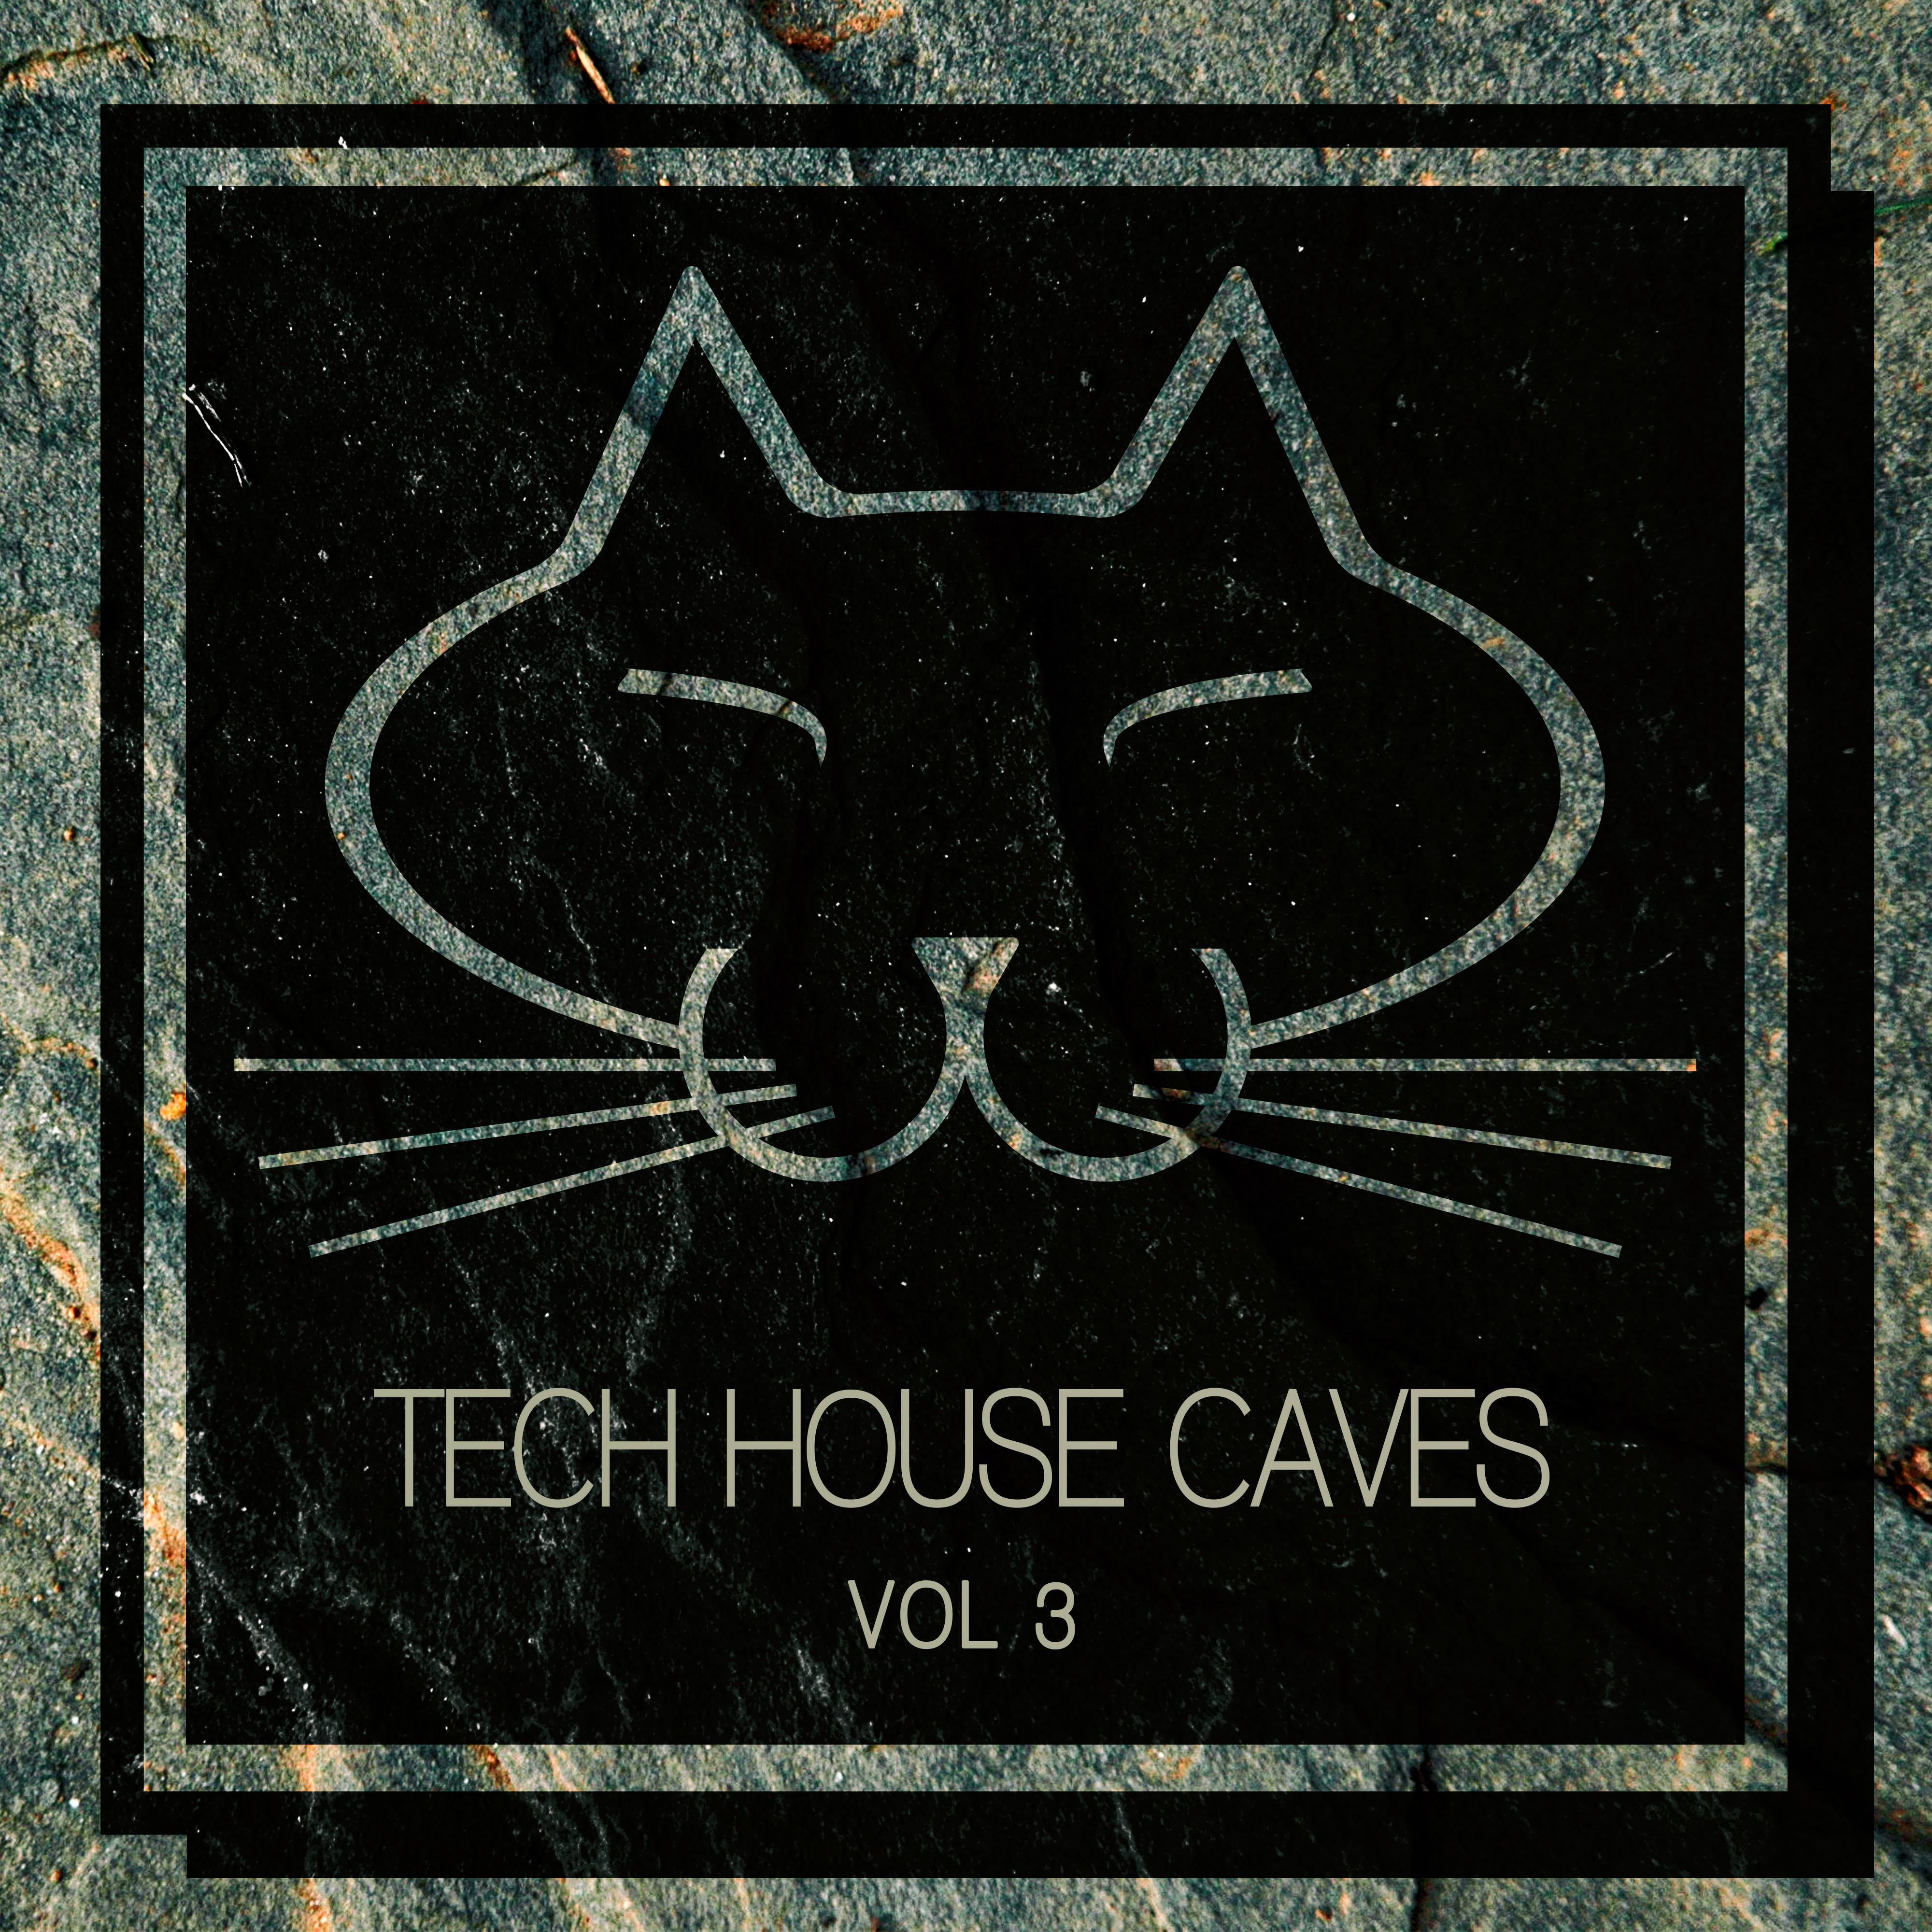 Tech House Caves, Vol. 3